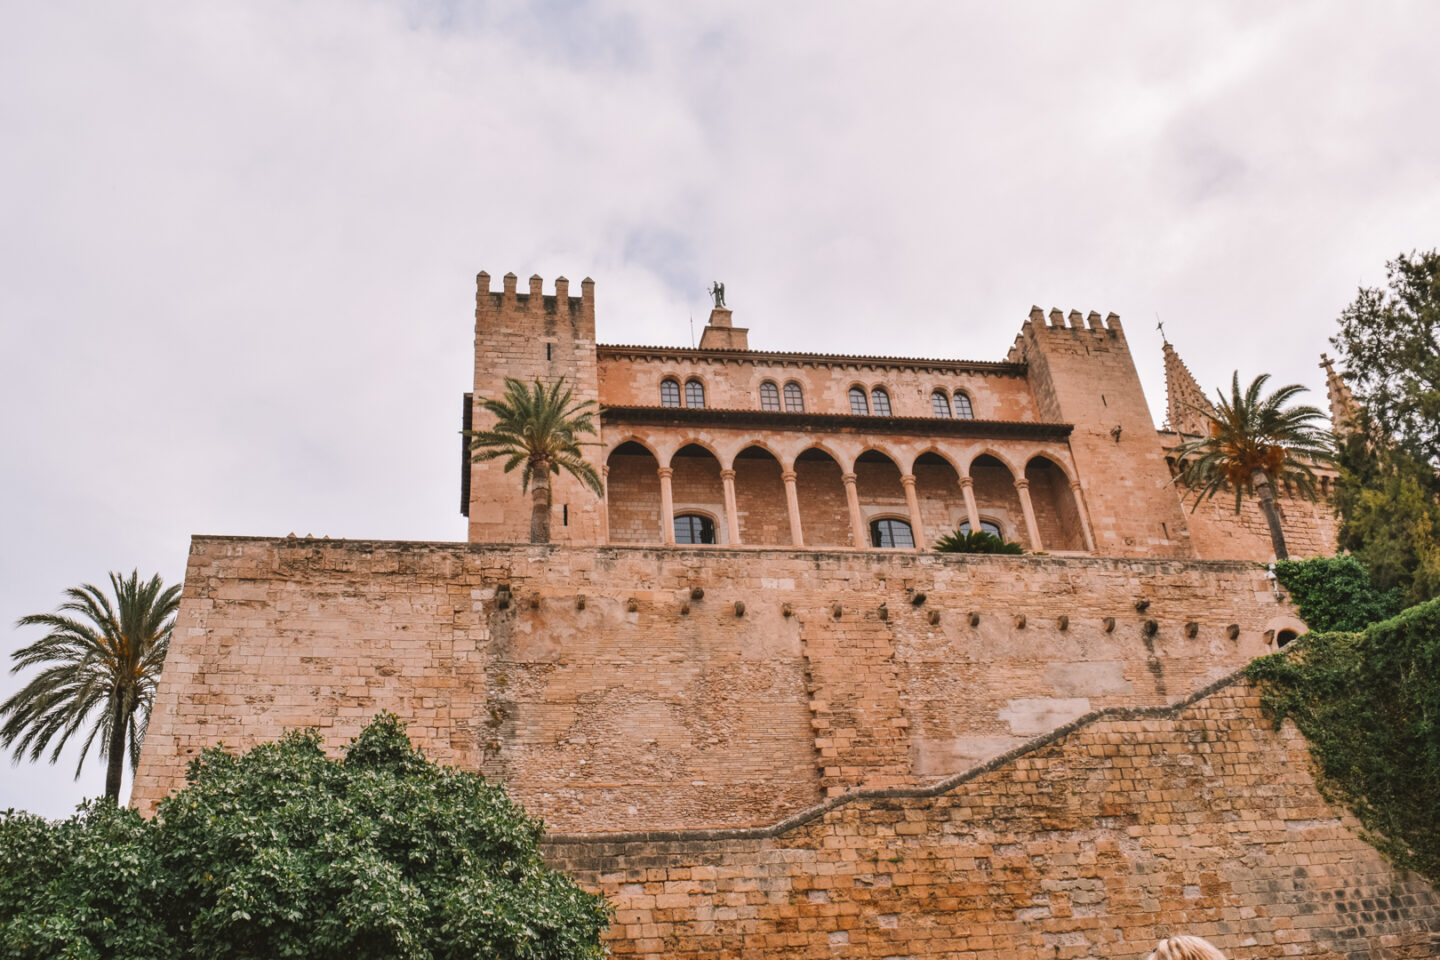 Visit The Royal Palace of La Almudaina in Palma, Mallorca